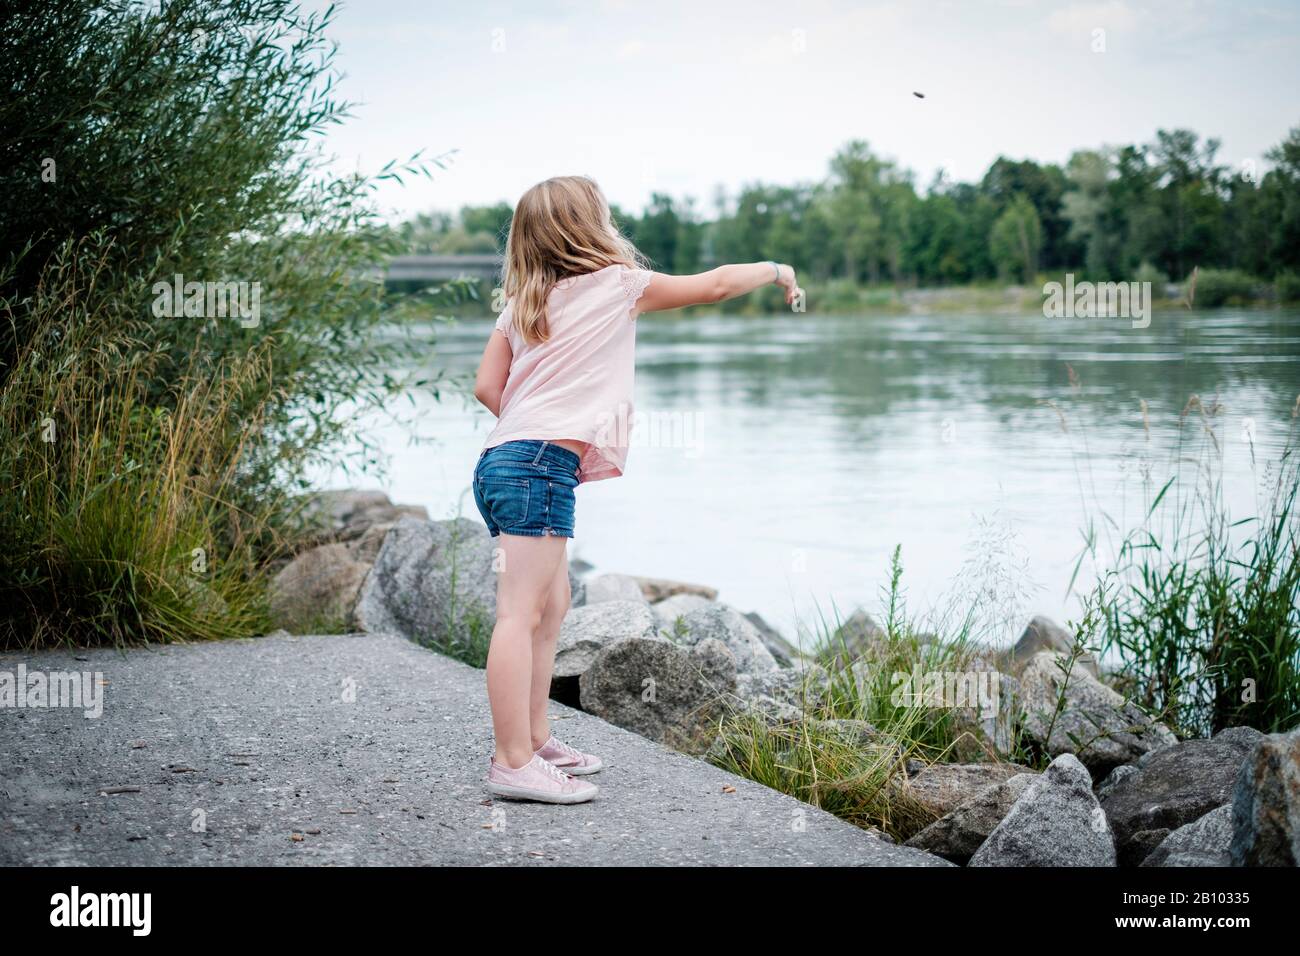 Little girl throws stones into a river Stock Photo